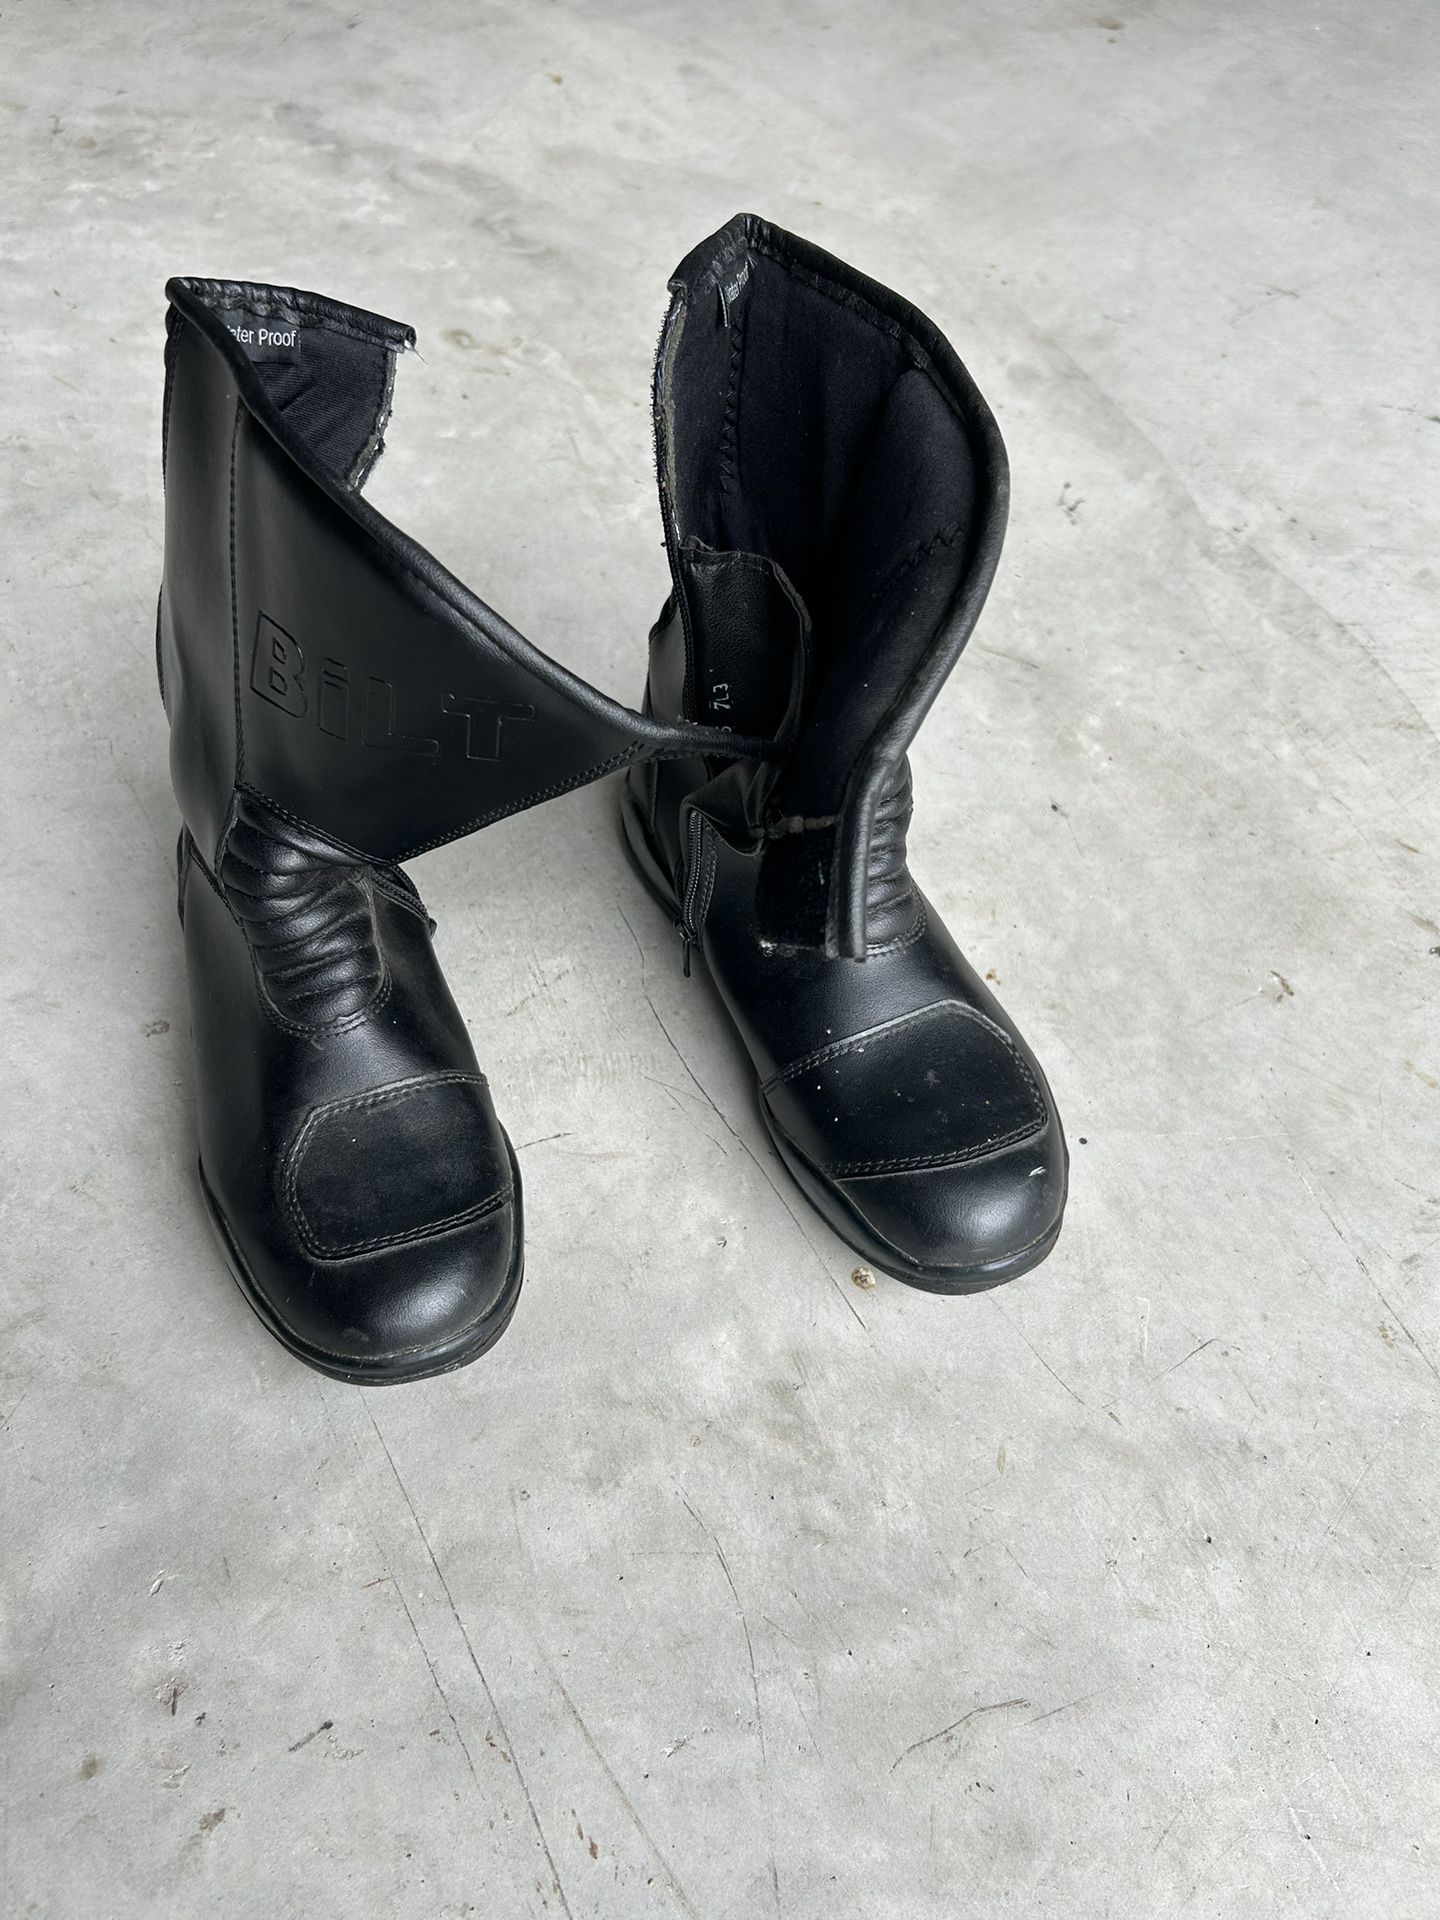 Bilt Women’s Motorcycle Boots, Size 7